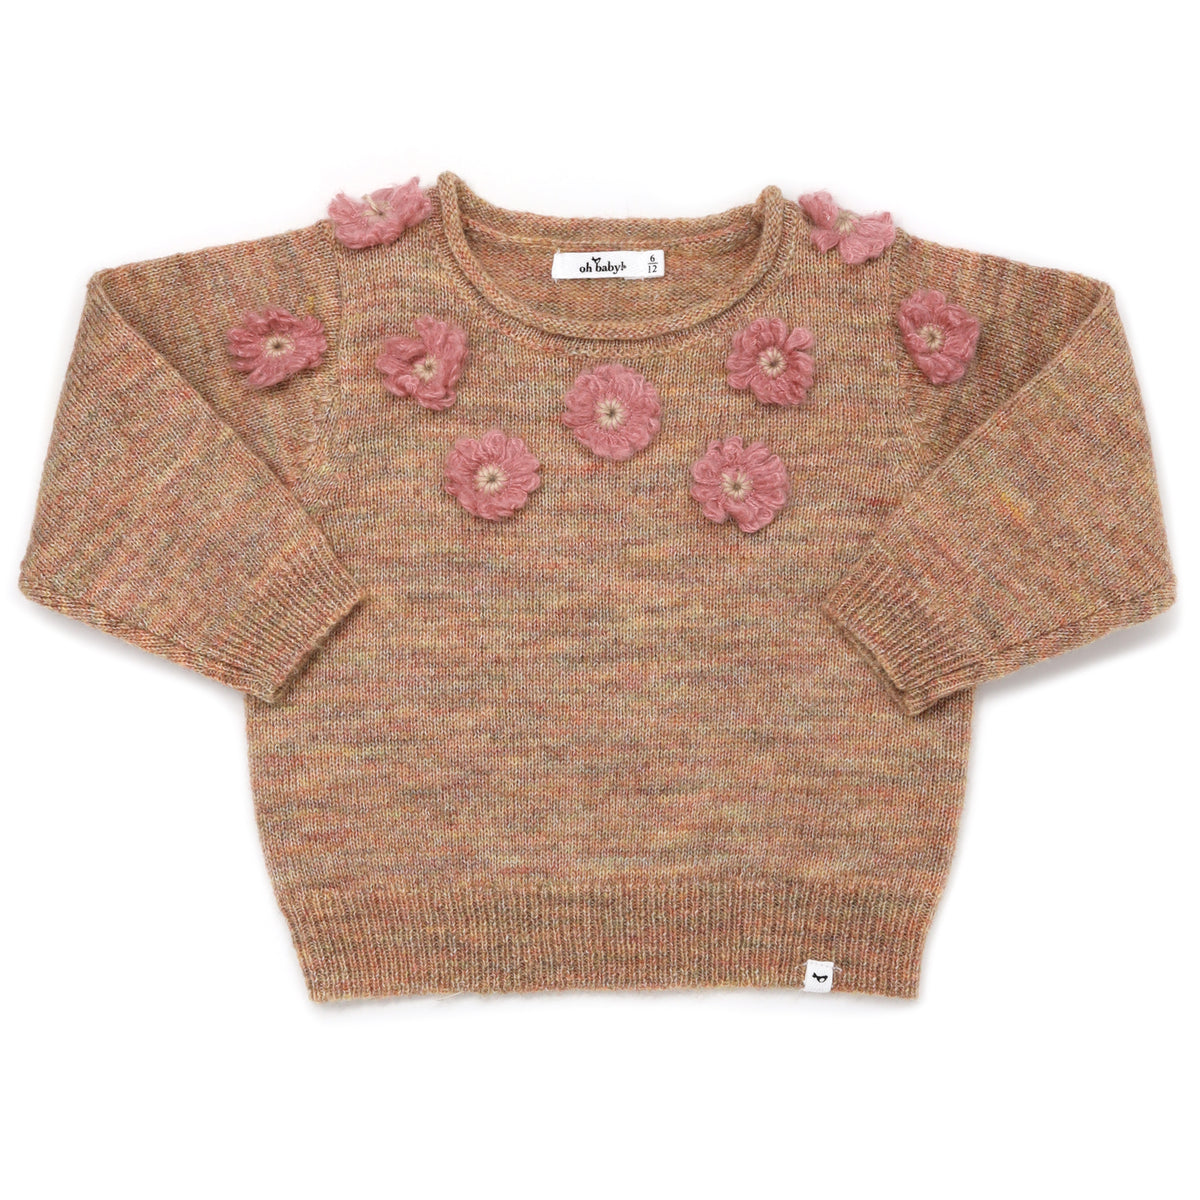 oh baby! Scandi Flower Knit Sweater - Heather Brown